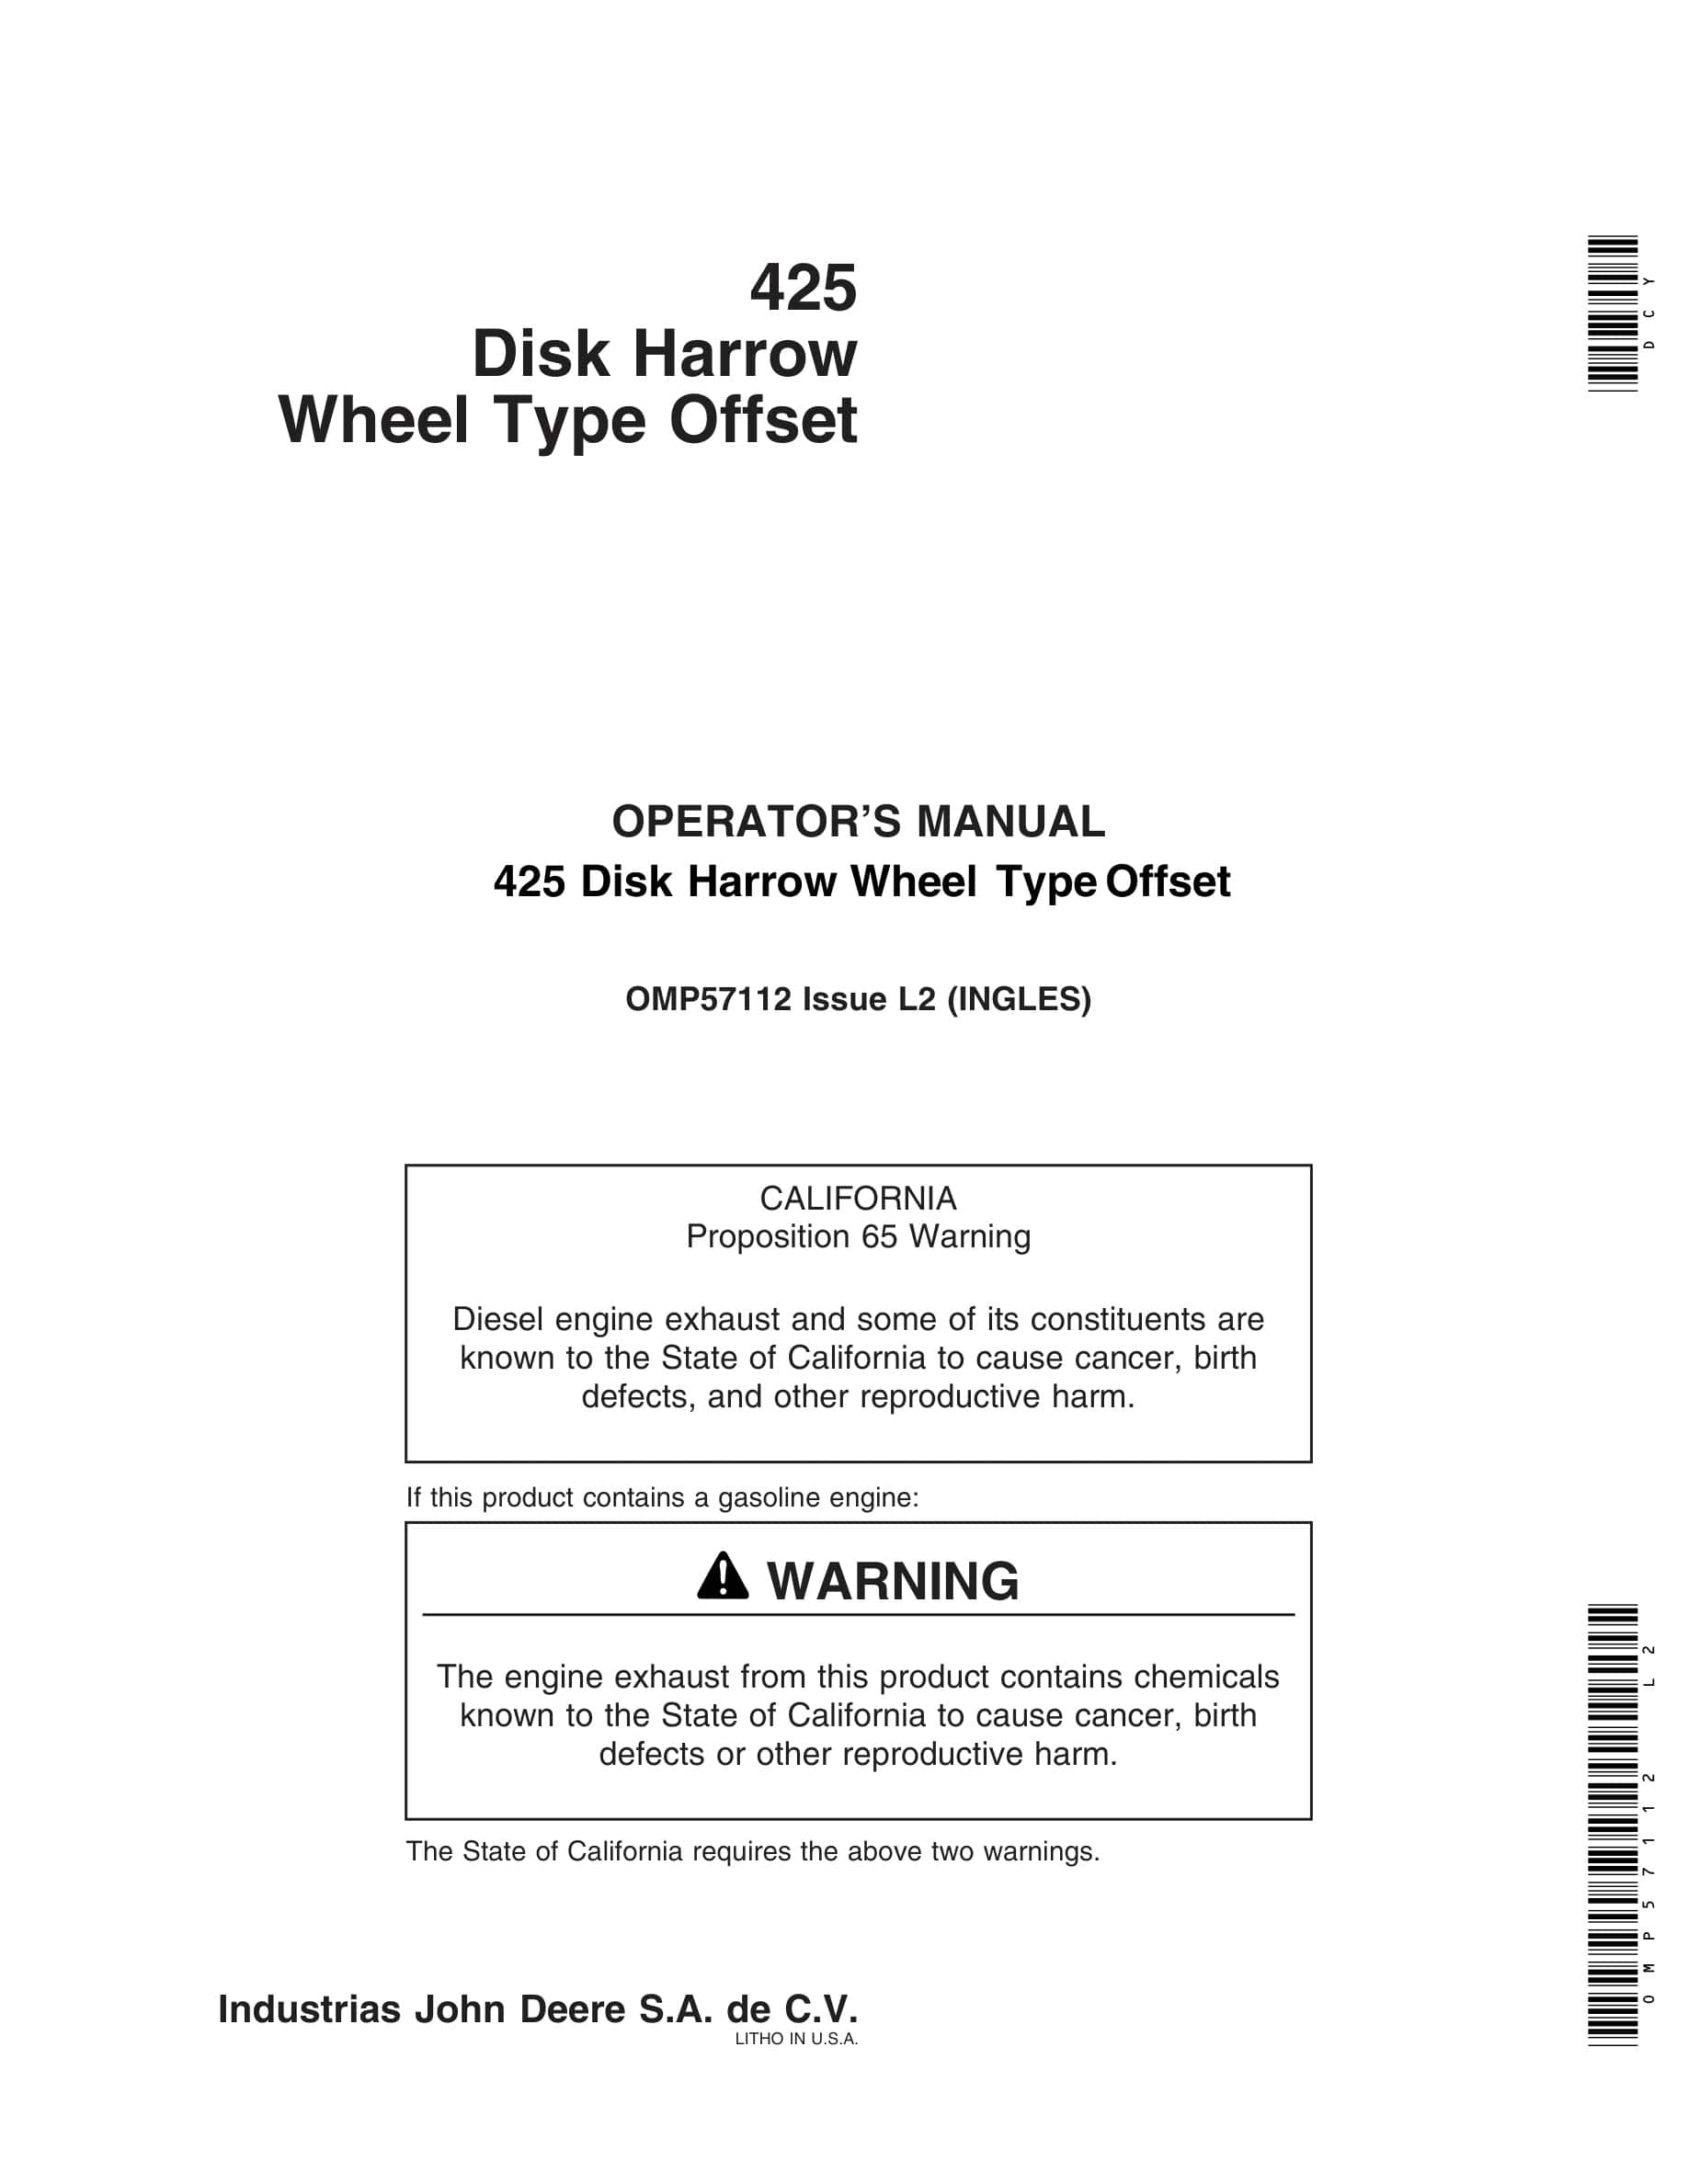 John Deere 425 Disk Harrow Wheel Type Offset Operator Manual OMP57112-1